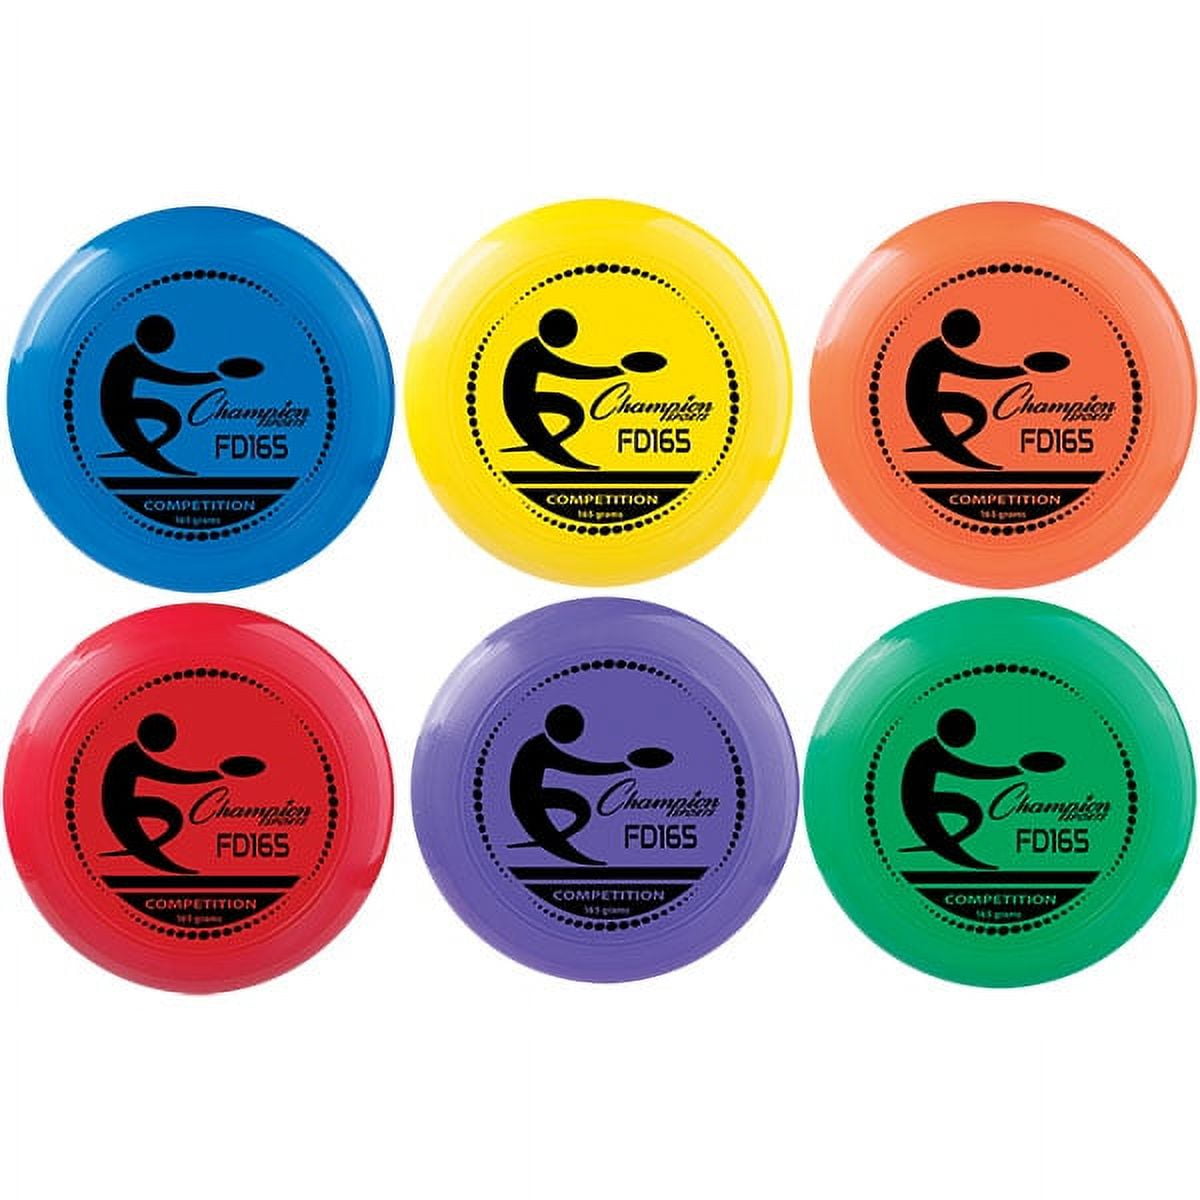 Fd165 165 G Competition Plastic Discs, Multicolor